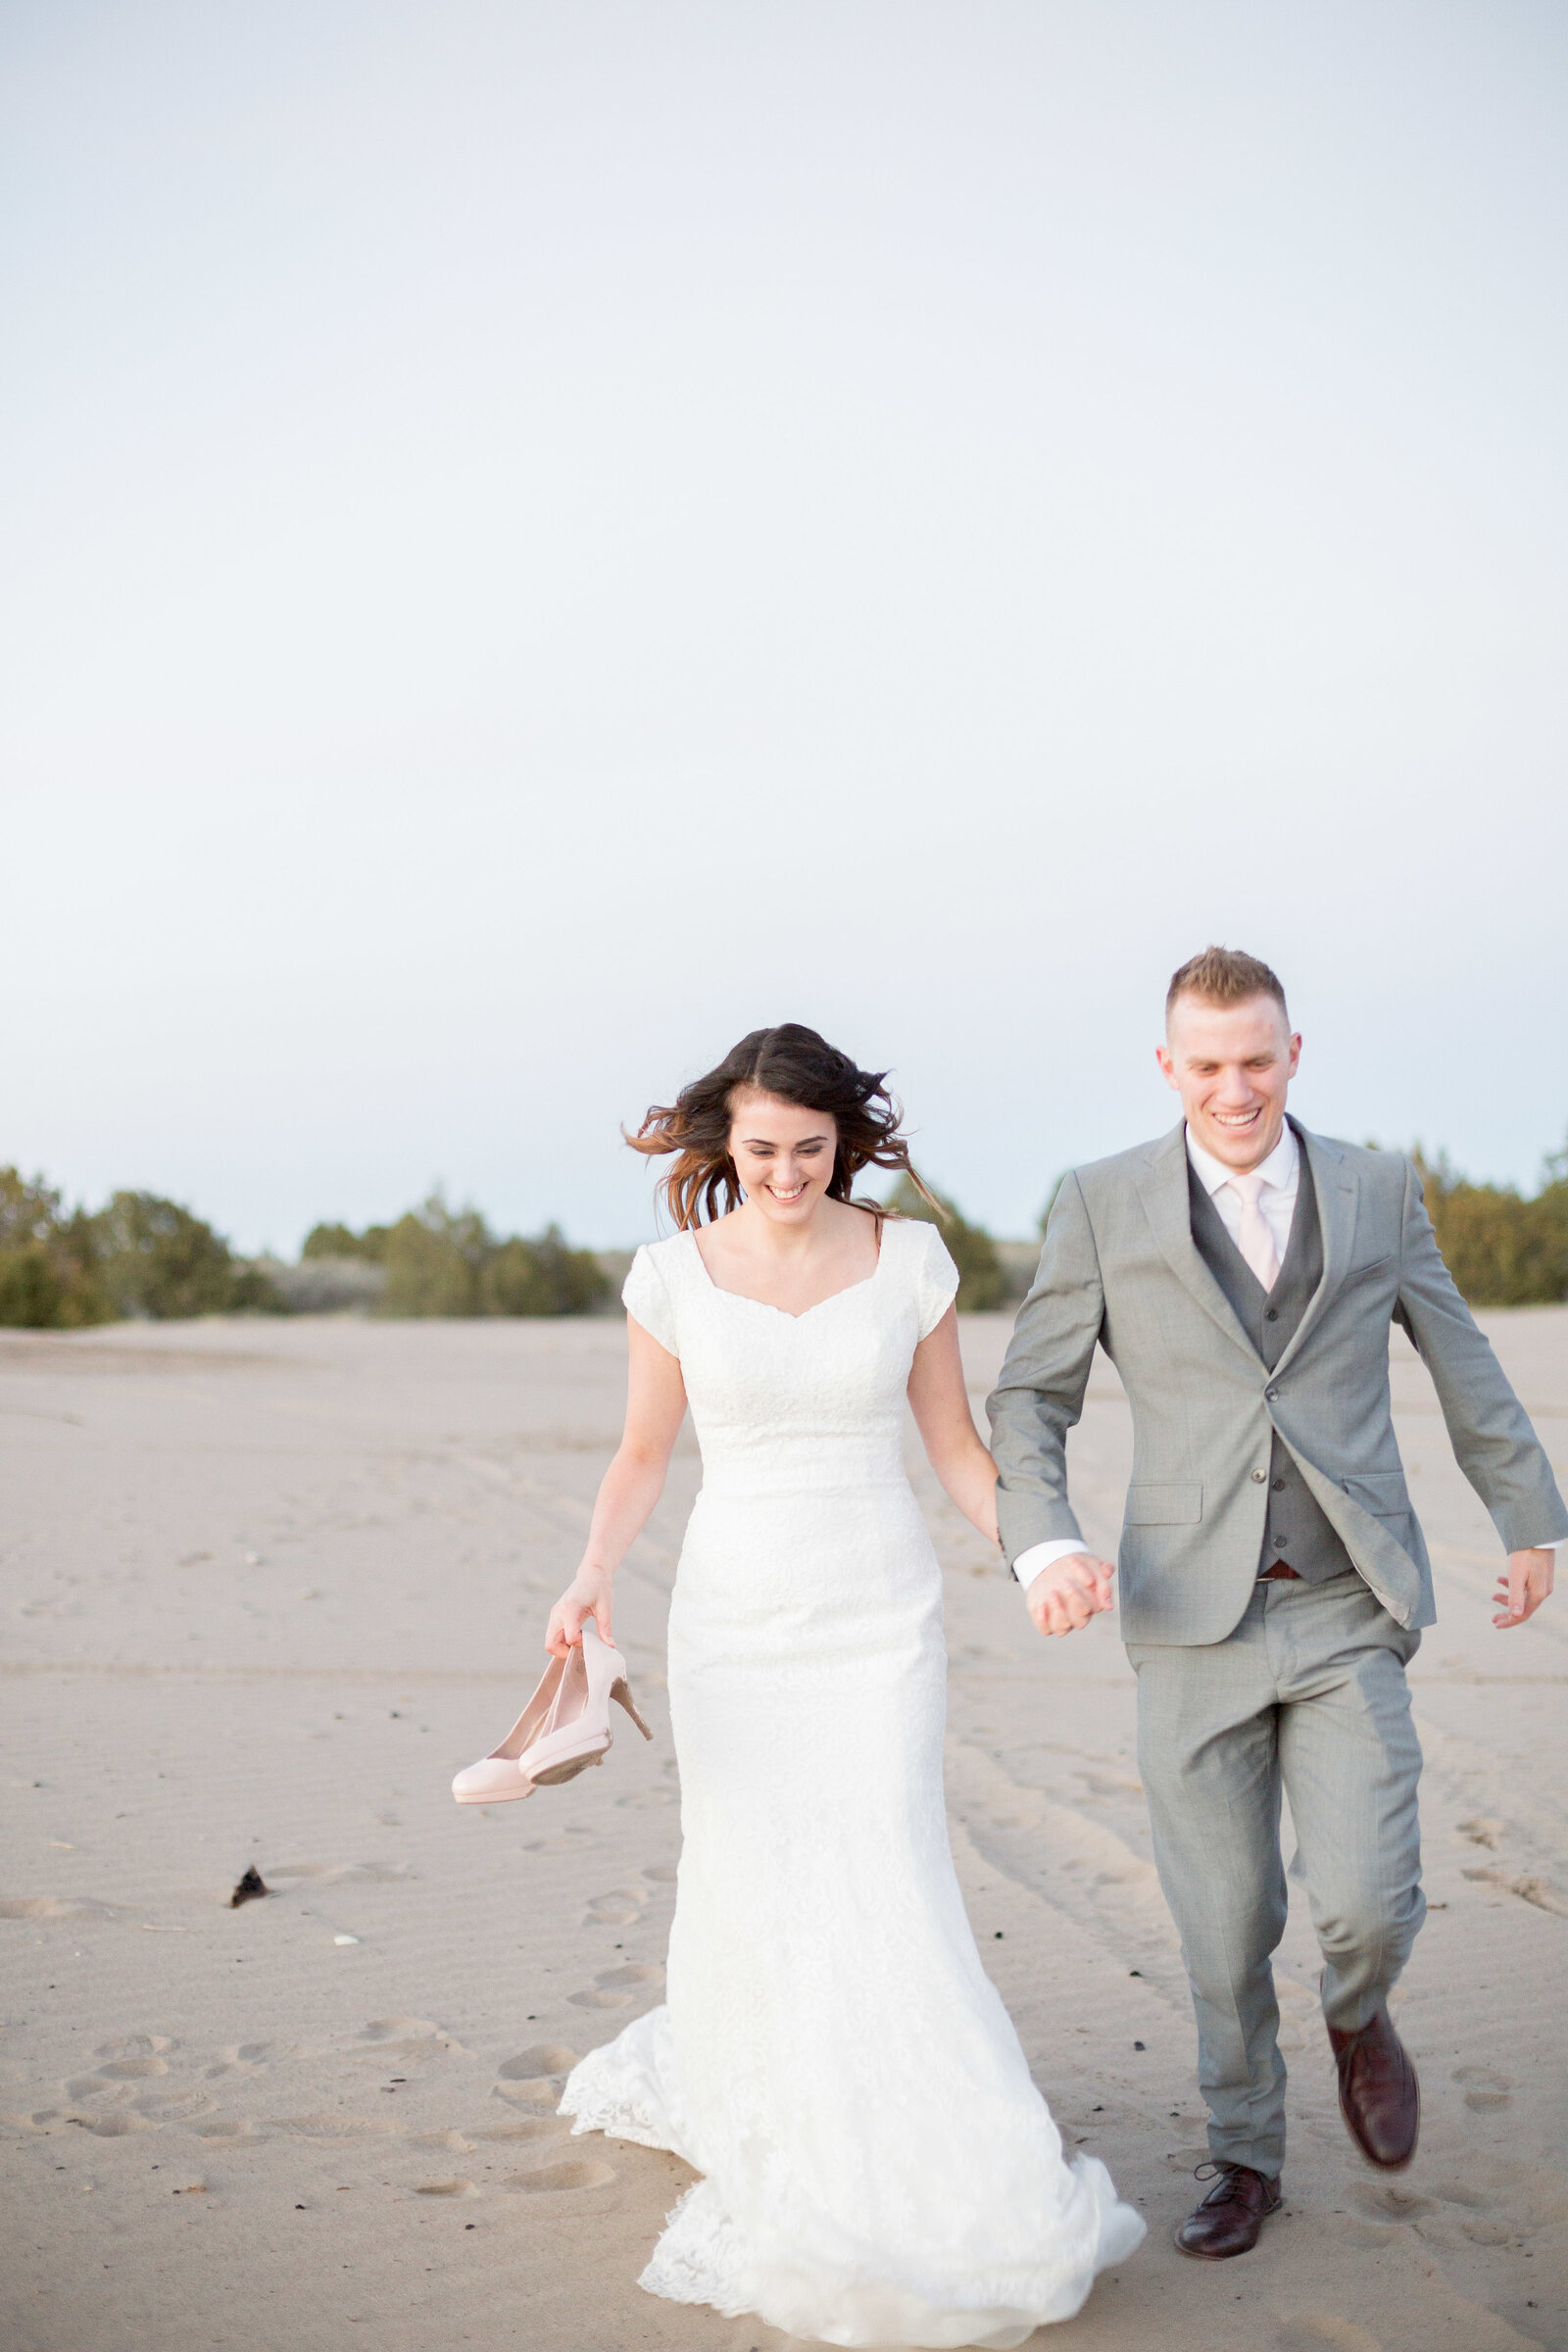 Idaho wedding photographers capture couple running in sand